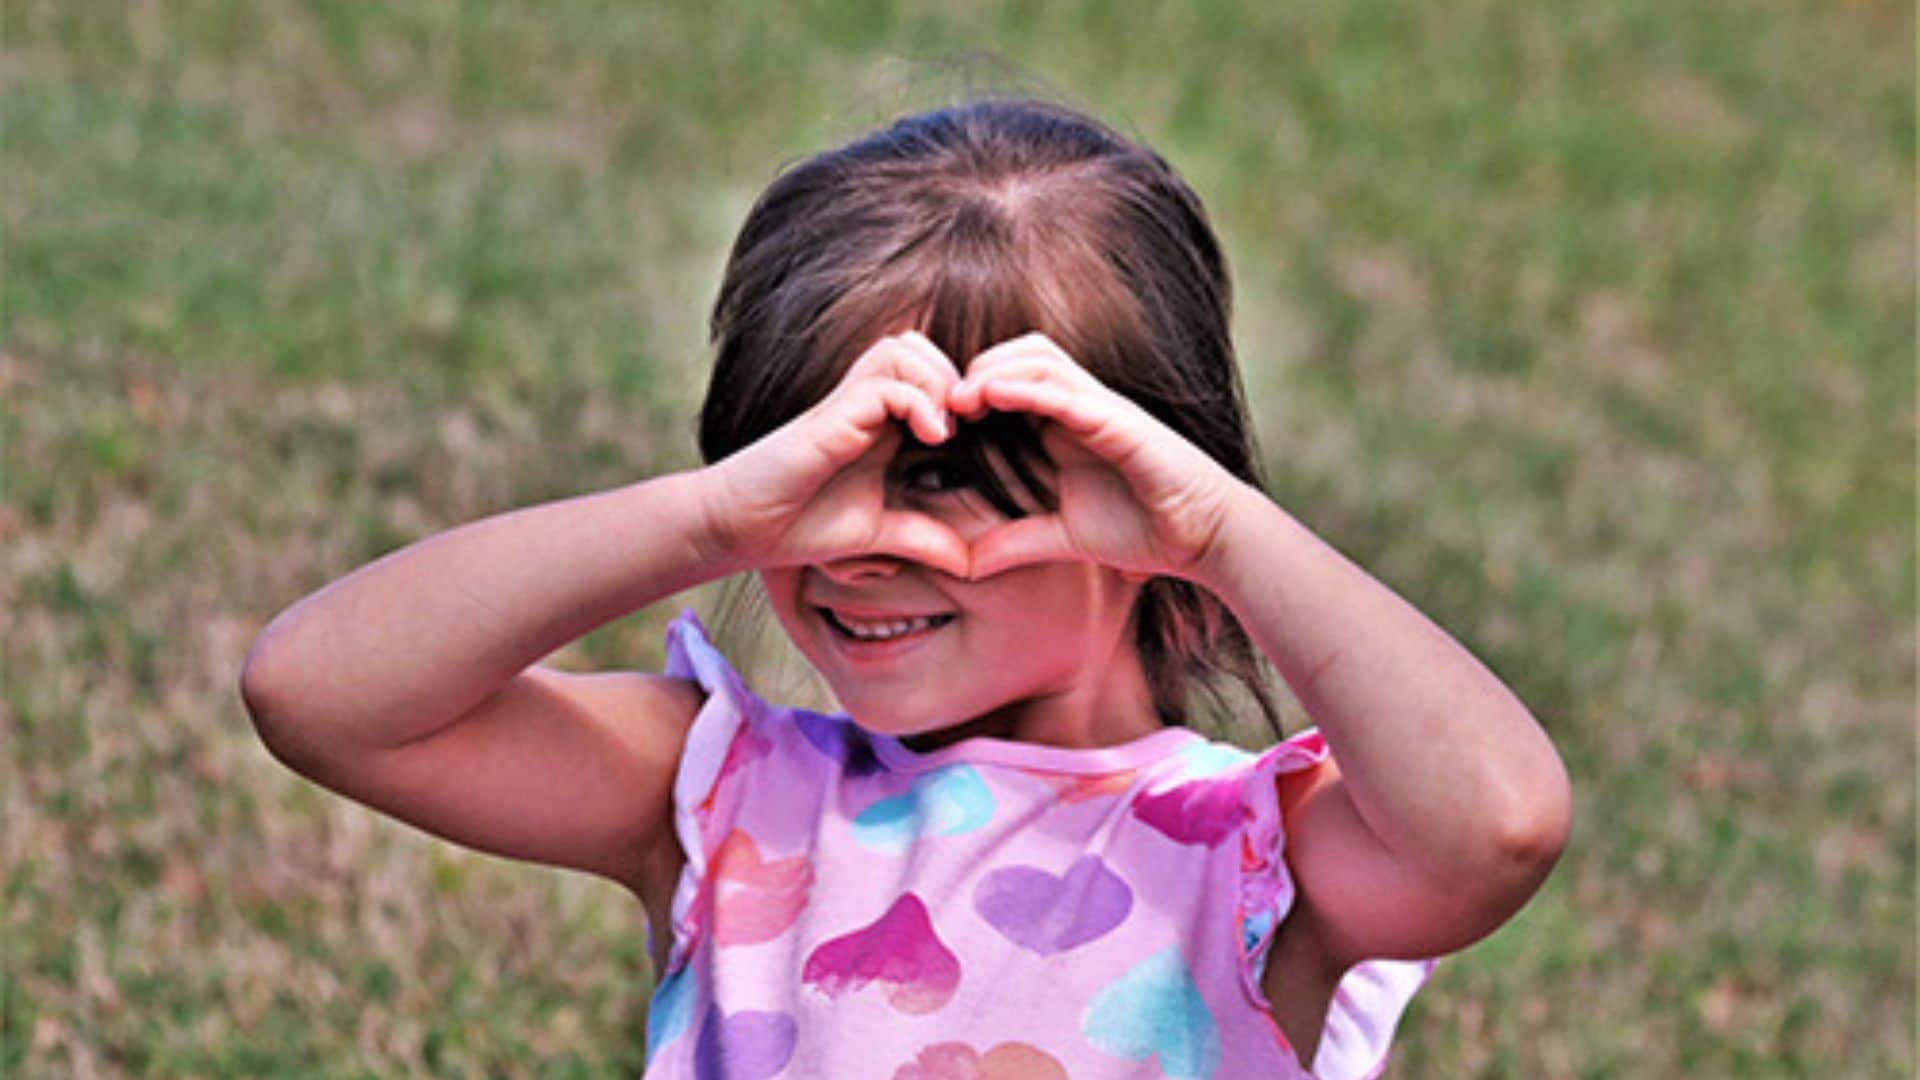 Little girl making heart gestures